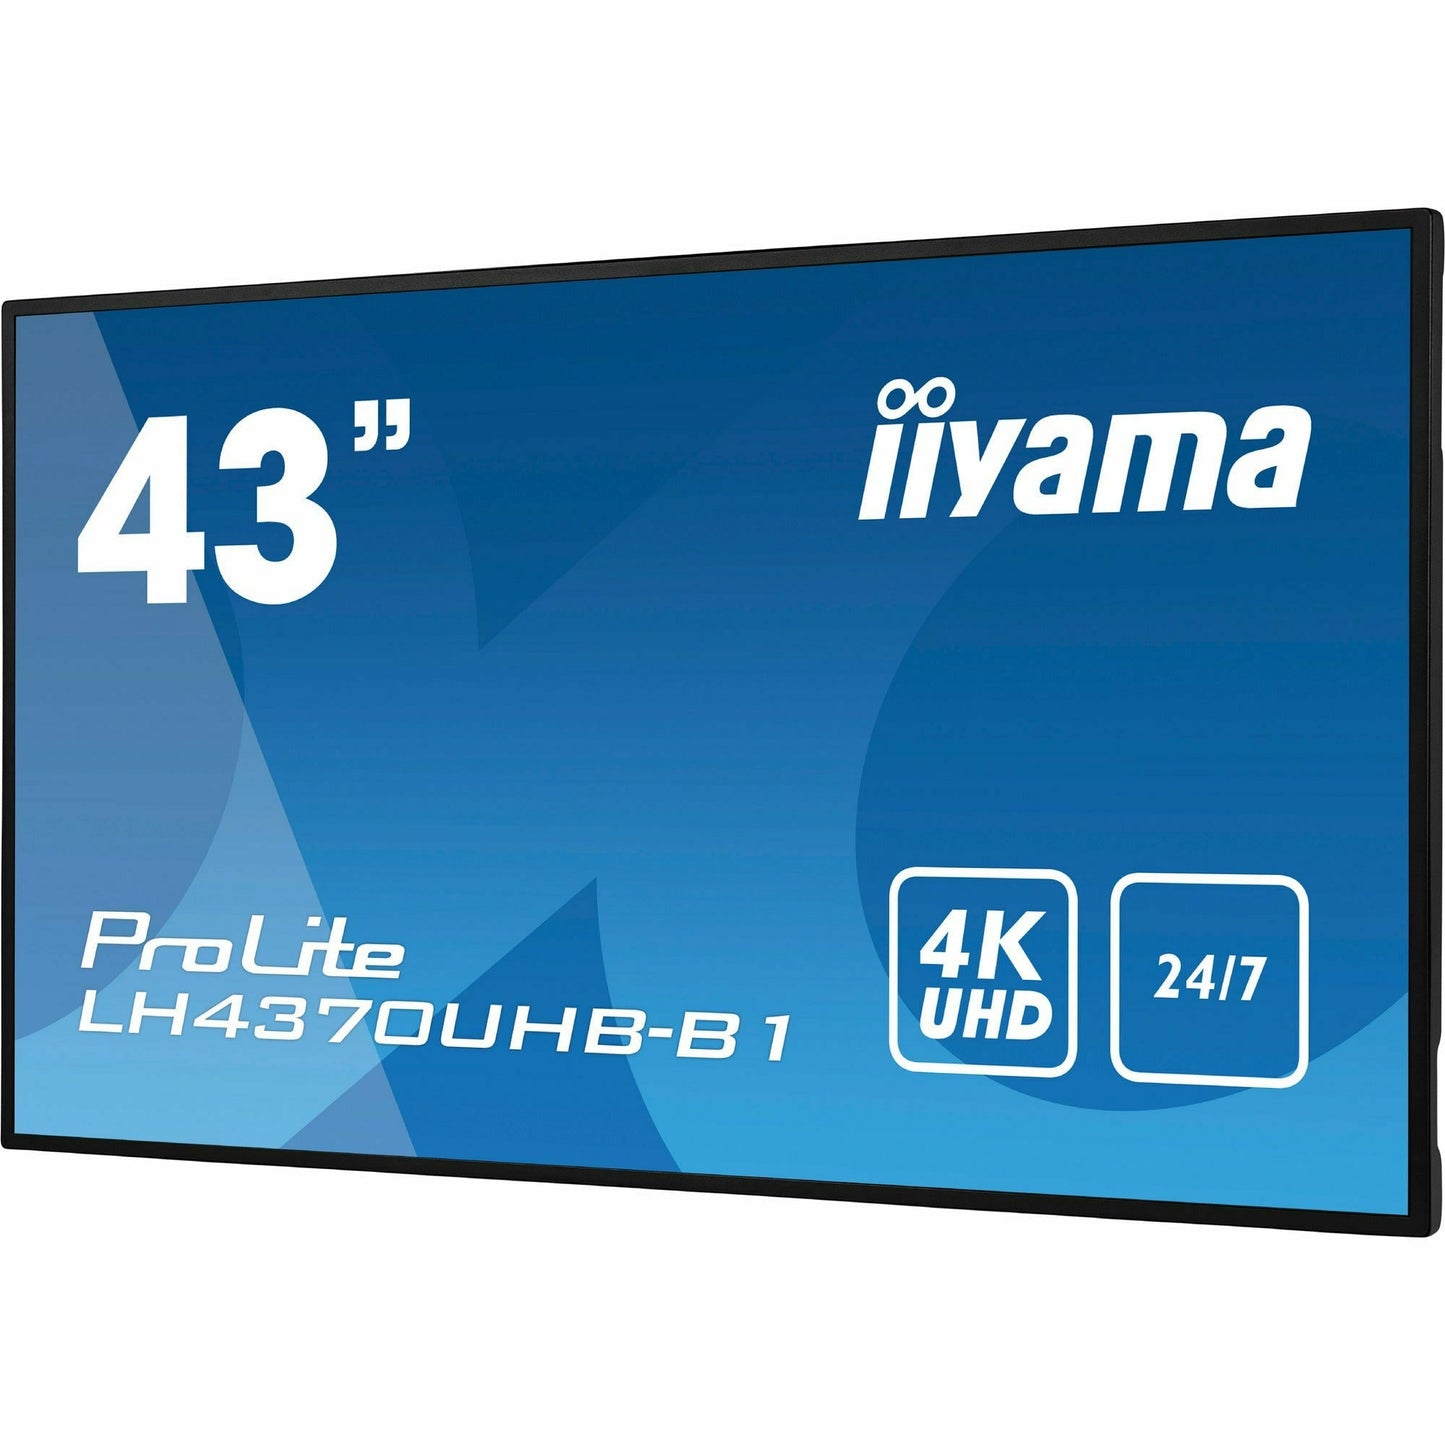 Dark Cyan iiyama ProLite LH4370UHB-B1 43” Large Format Display with 24/7, 4K UHD, Android 9.0 and 700cd/m² High Brightness